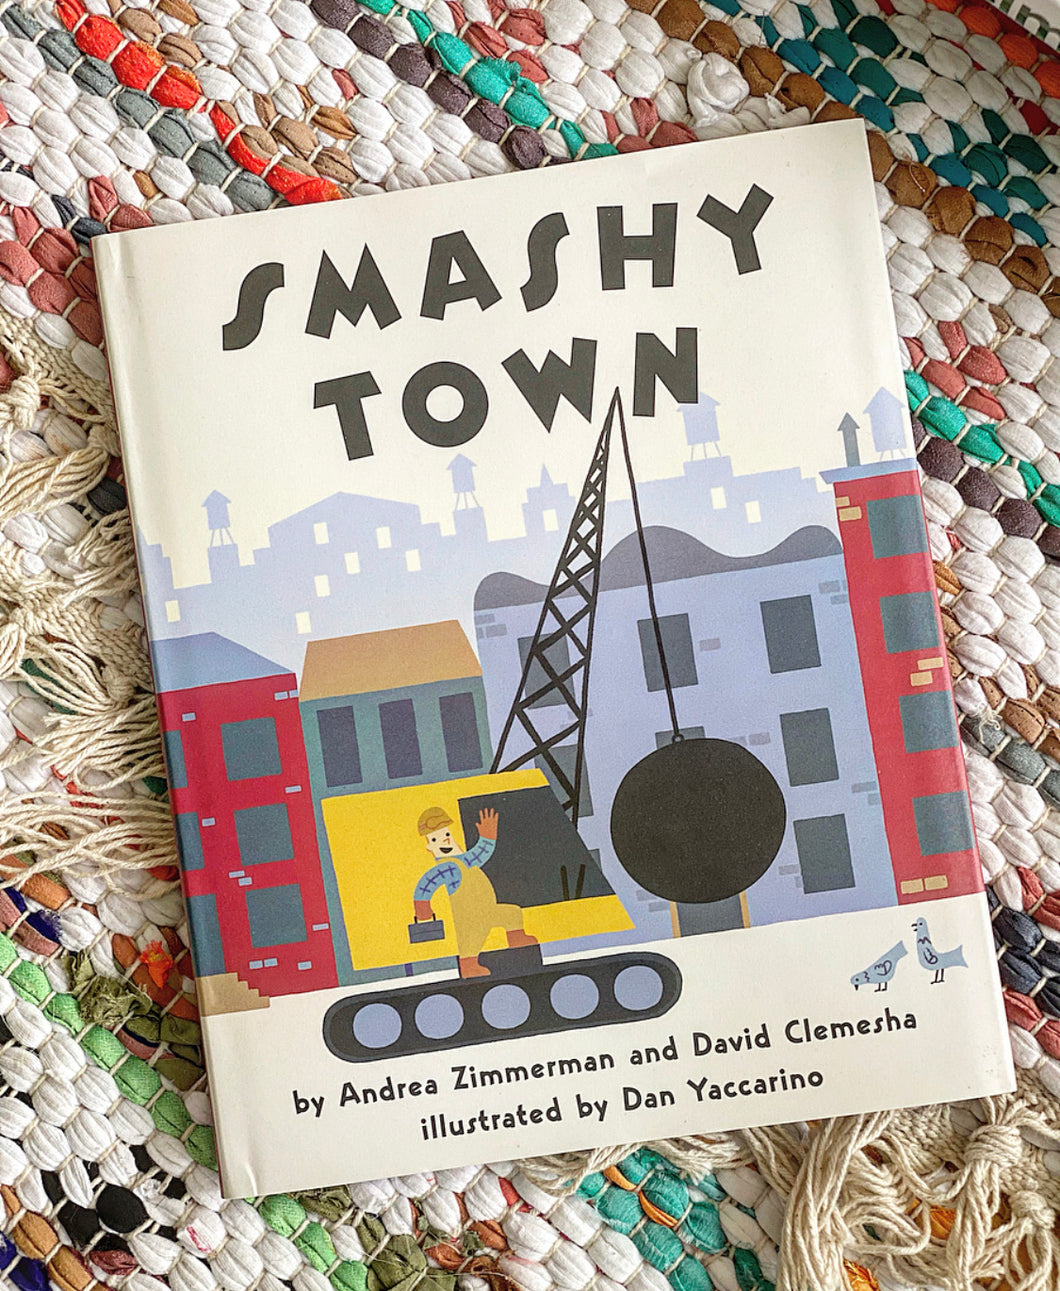 Smashy Town | Andrea Zimmerman + David Clemesha